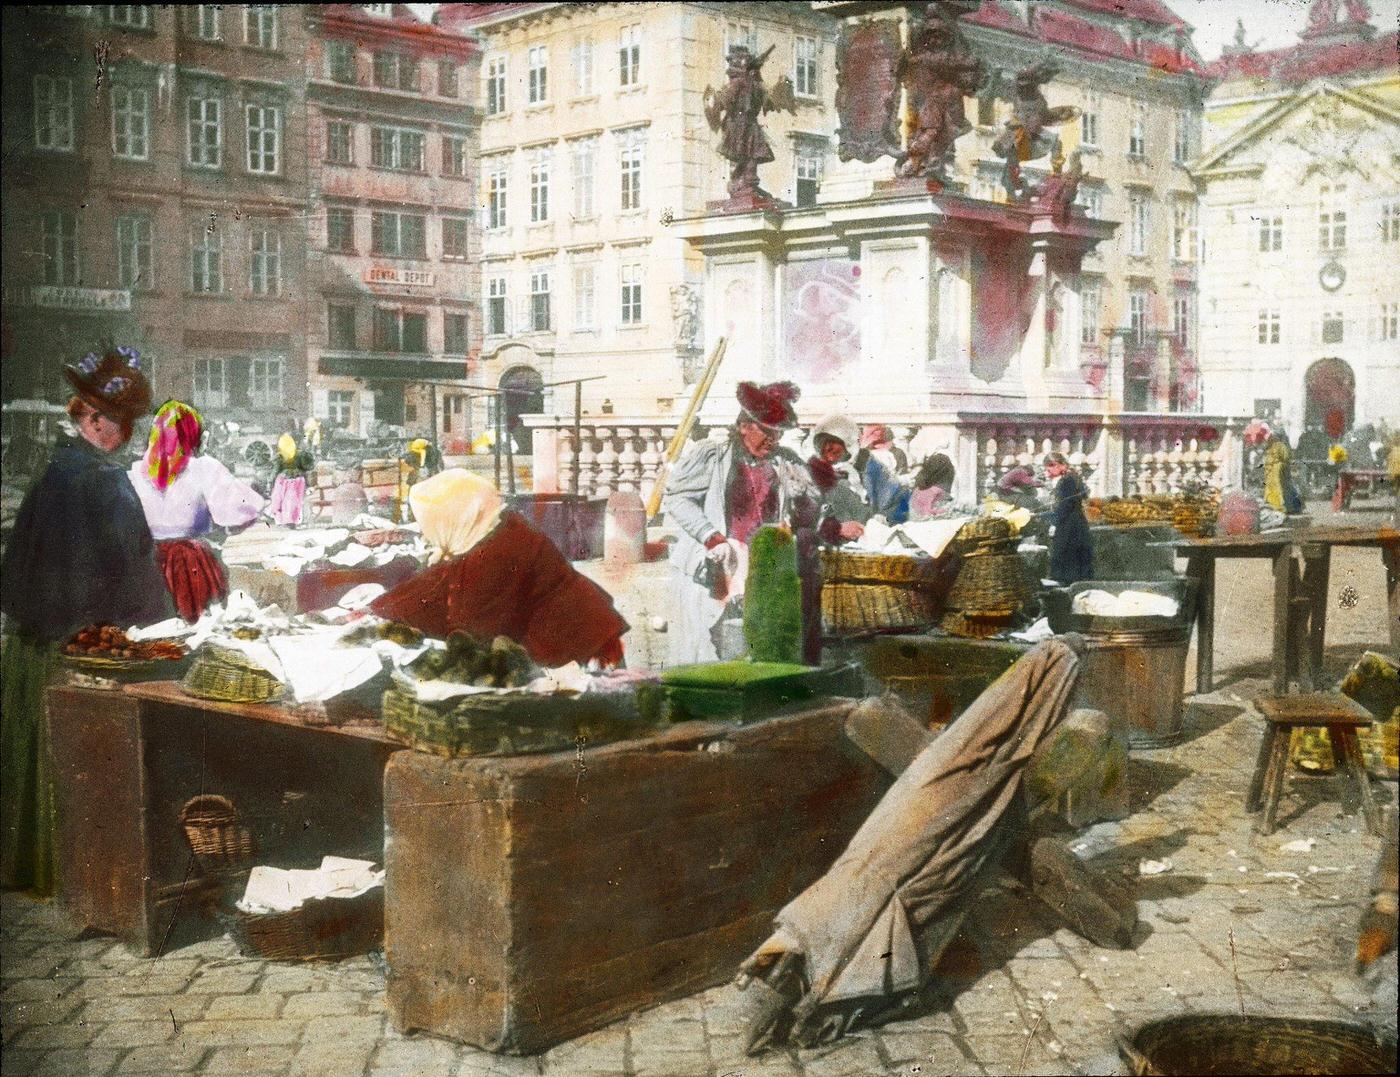 Flower market at Am Hof square in Vienna's first district, 1905.